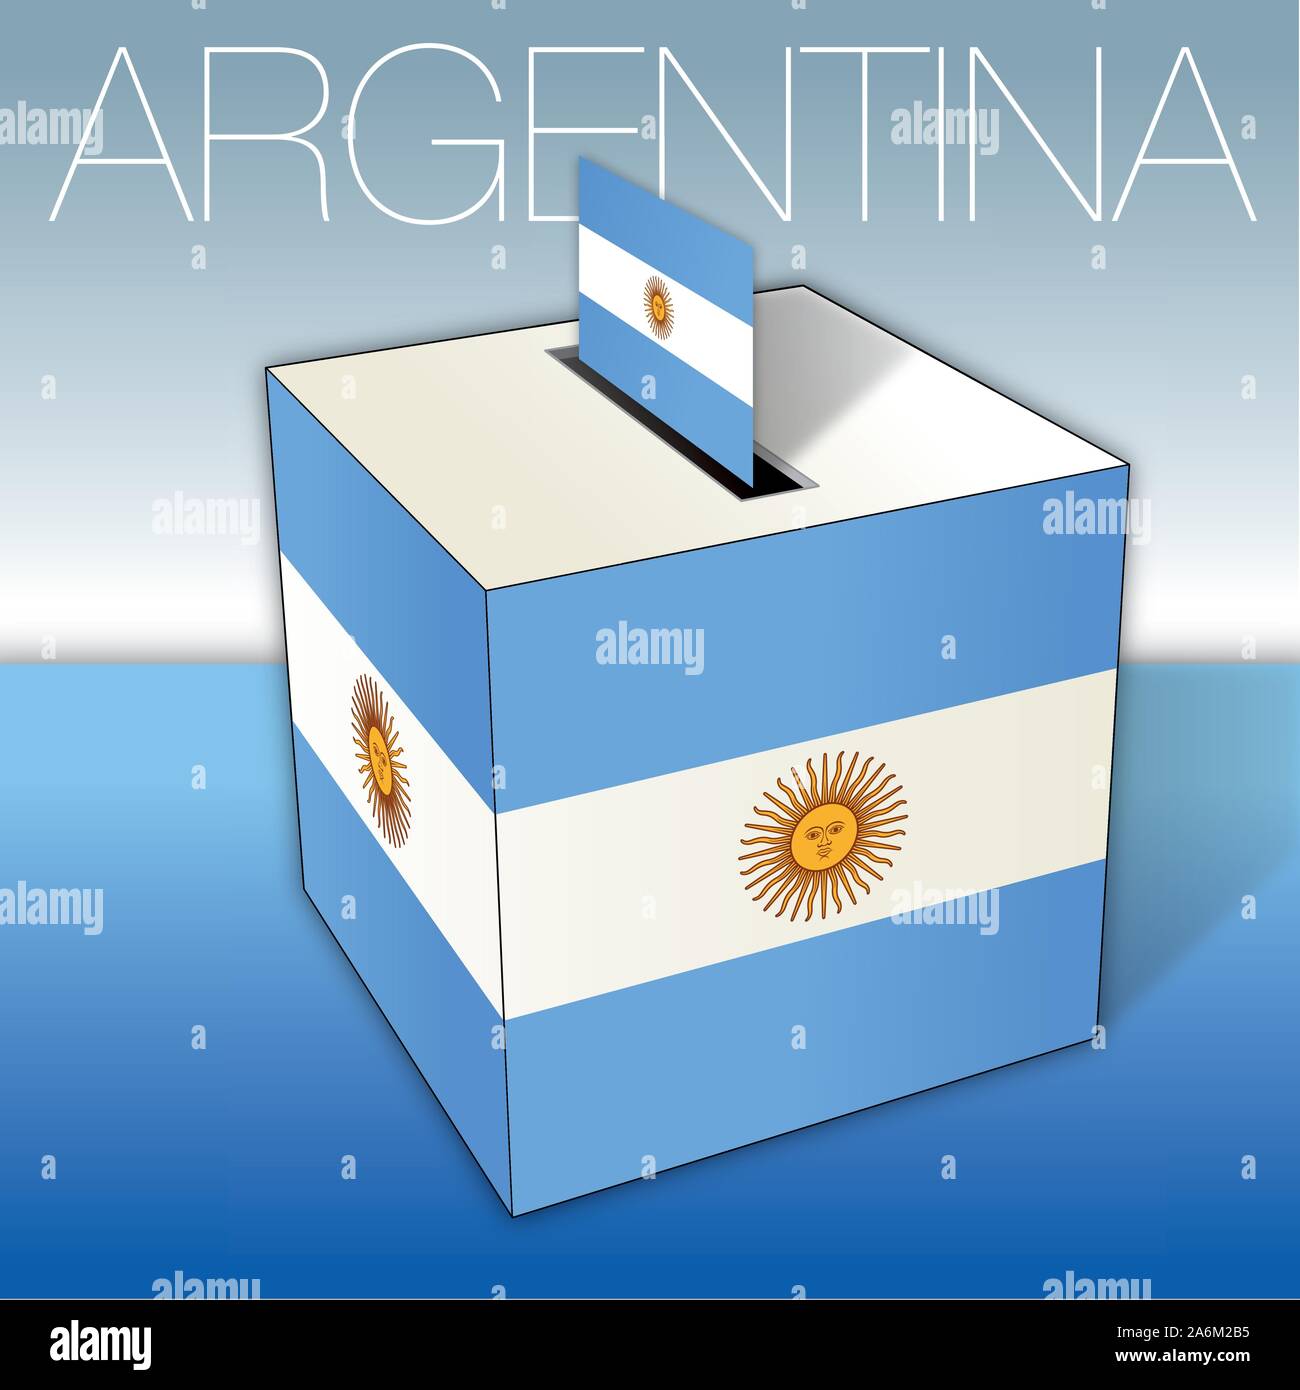 Argentina, voting box, flag and Argentina Republic national symbols, vector illustration Stock Vector